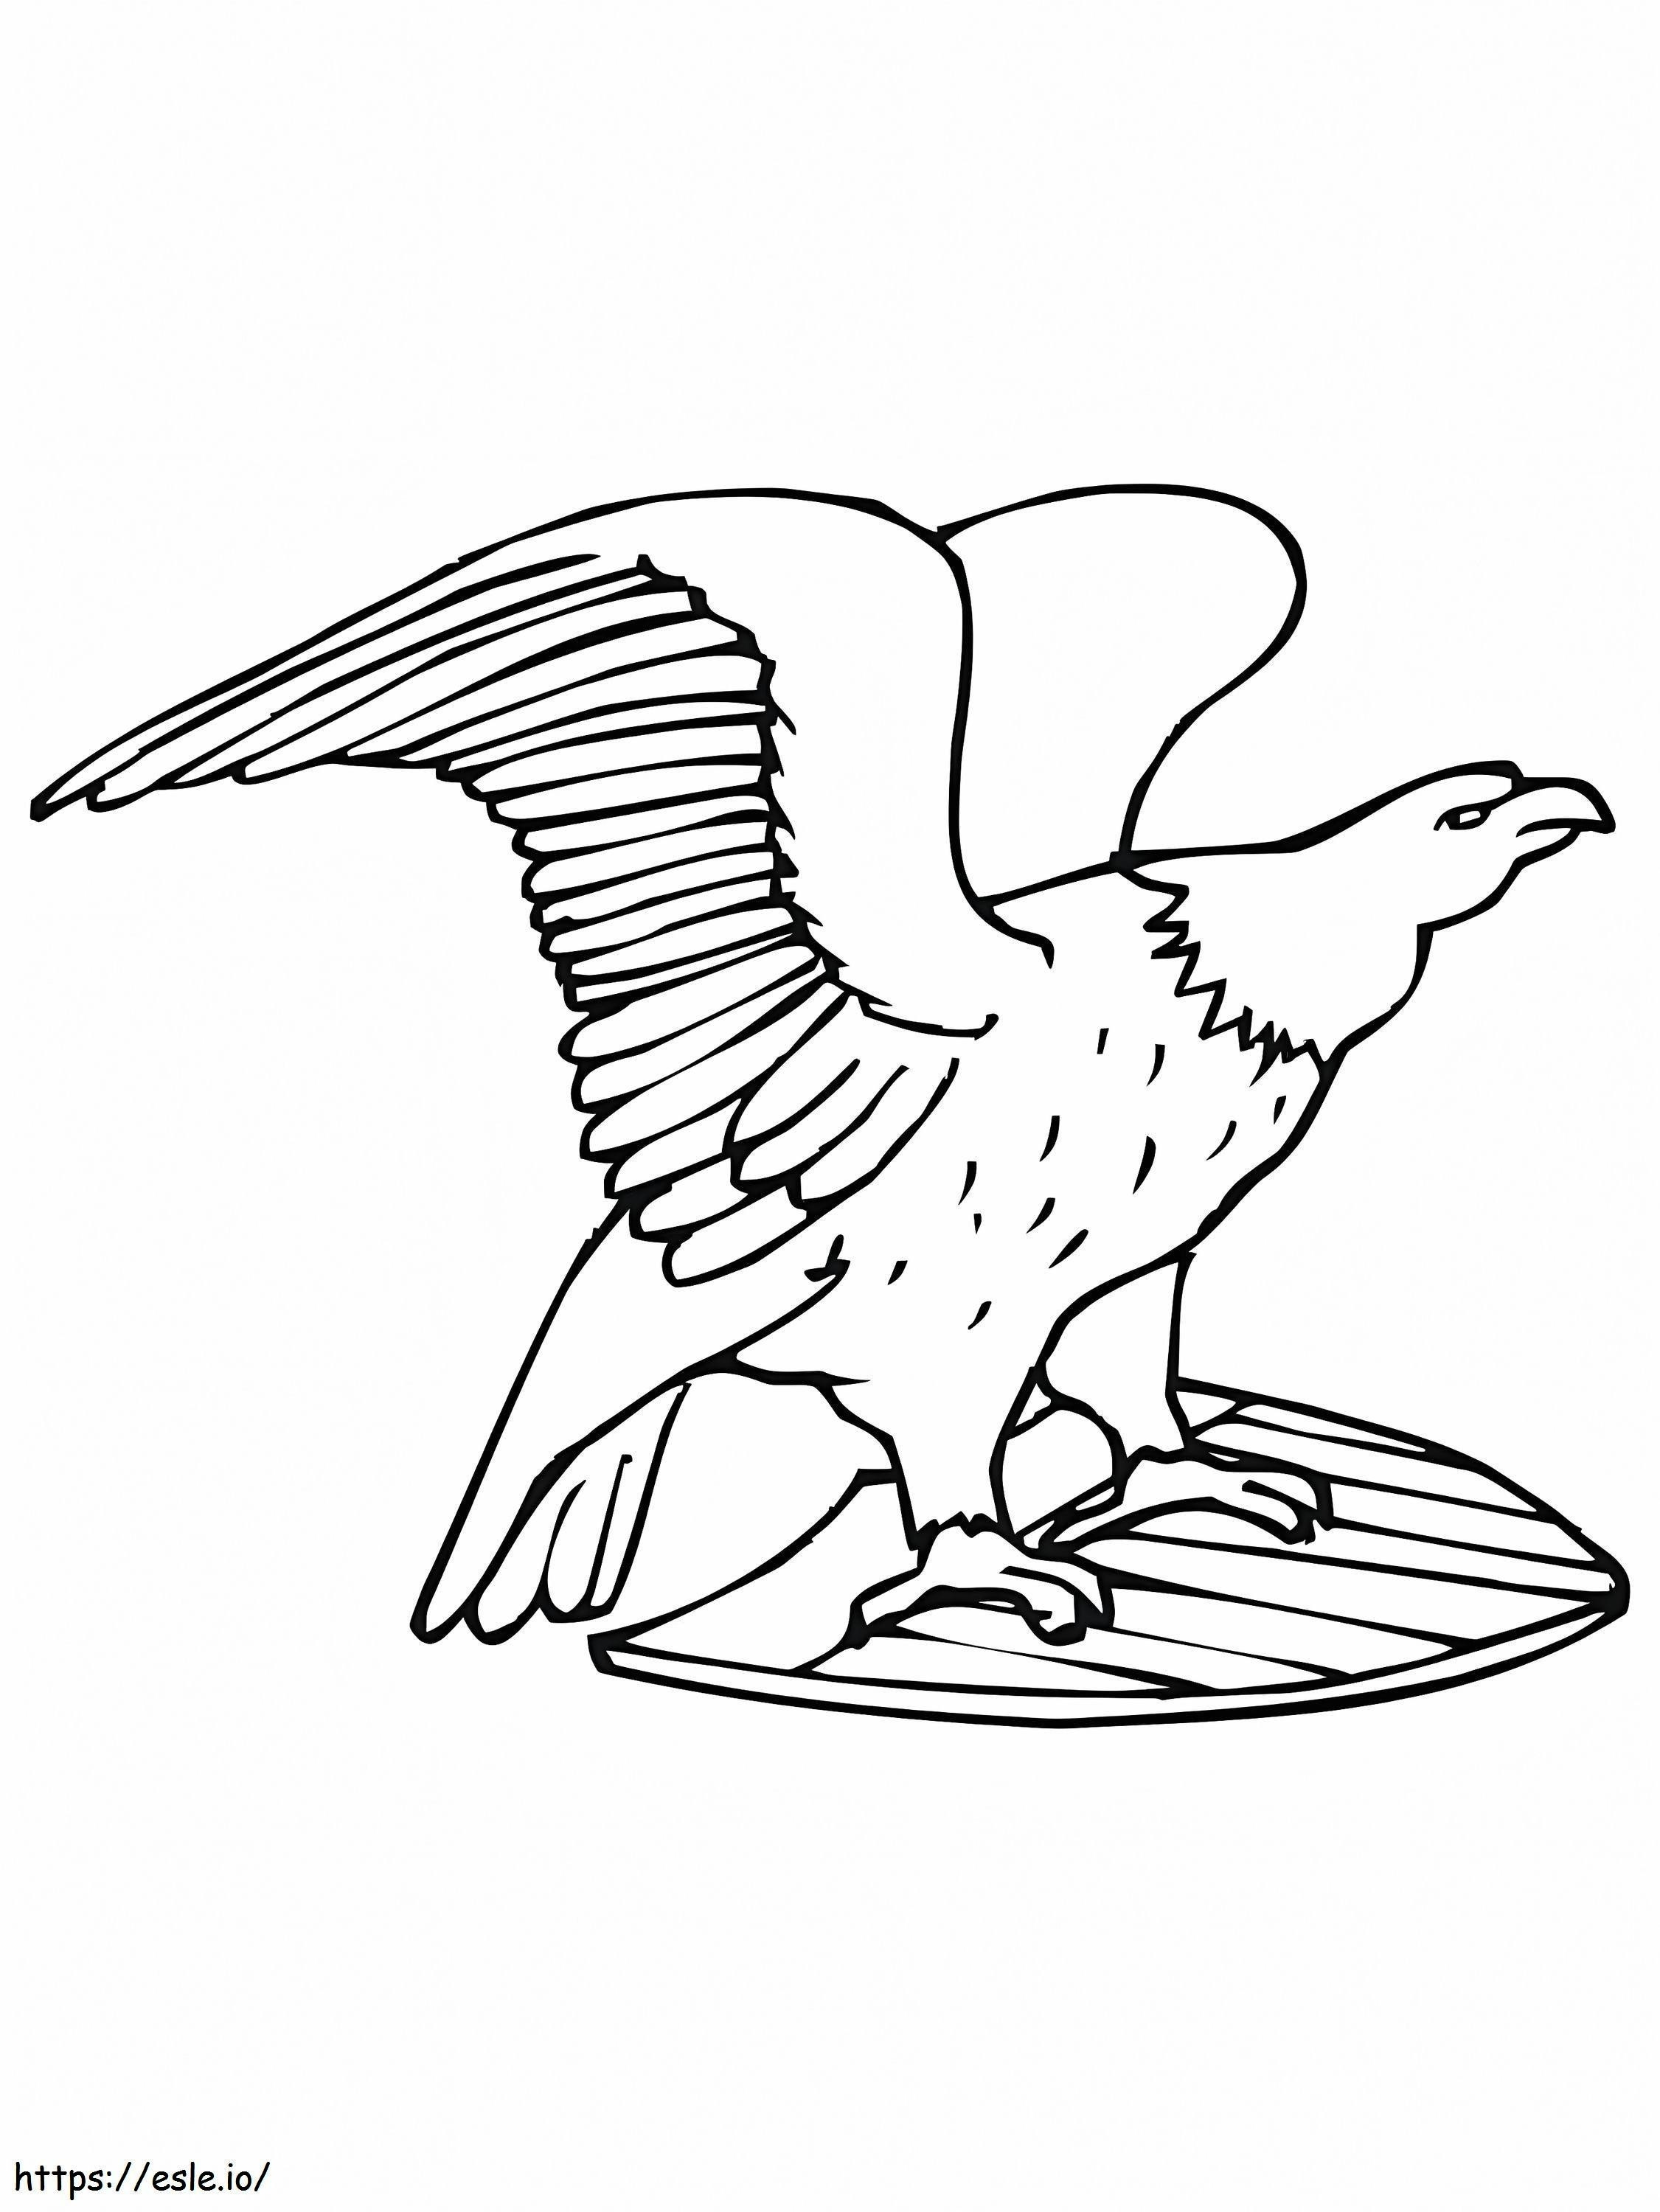 US Bald Eagle coloring page